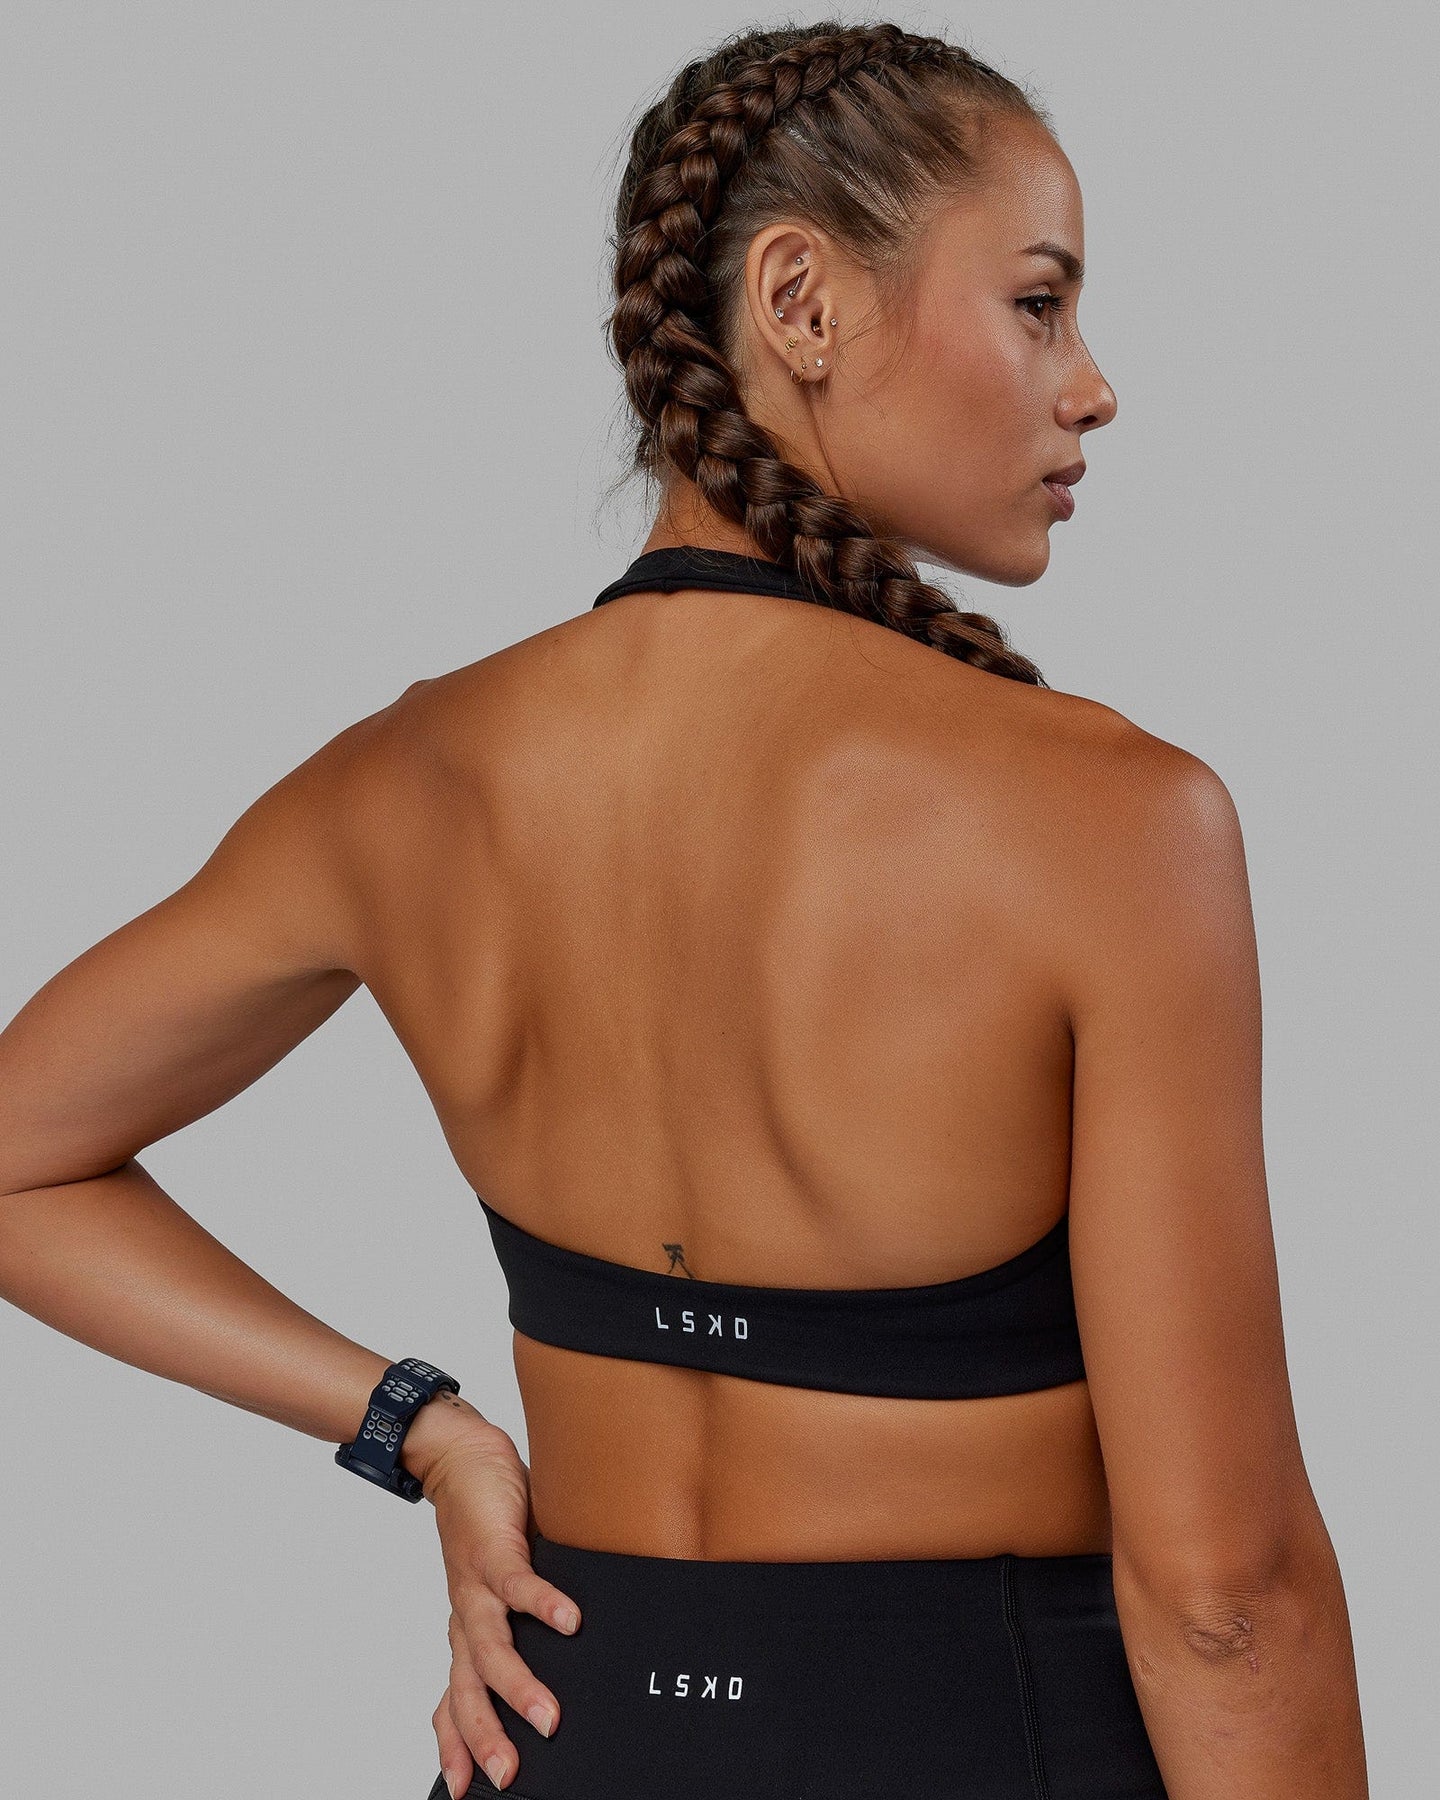 Backless Sports Bra with Halter Neck Design • Value Yoga